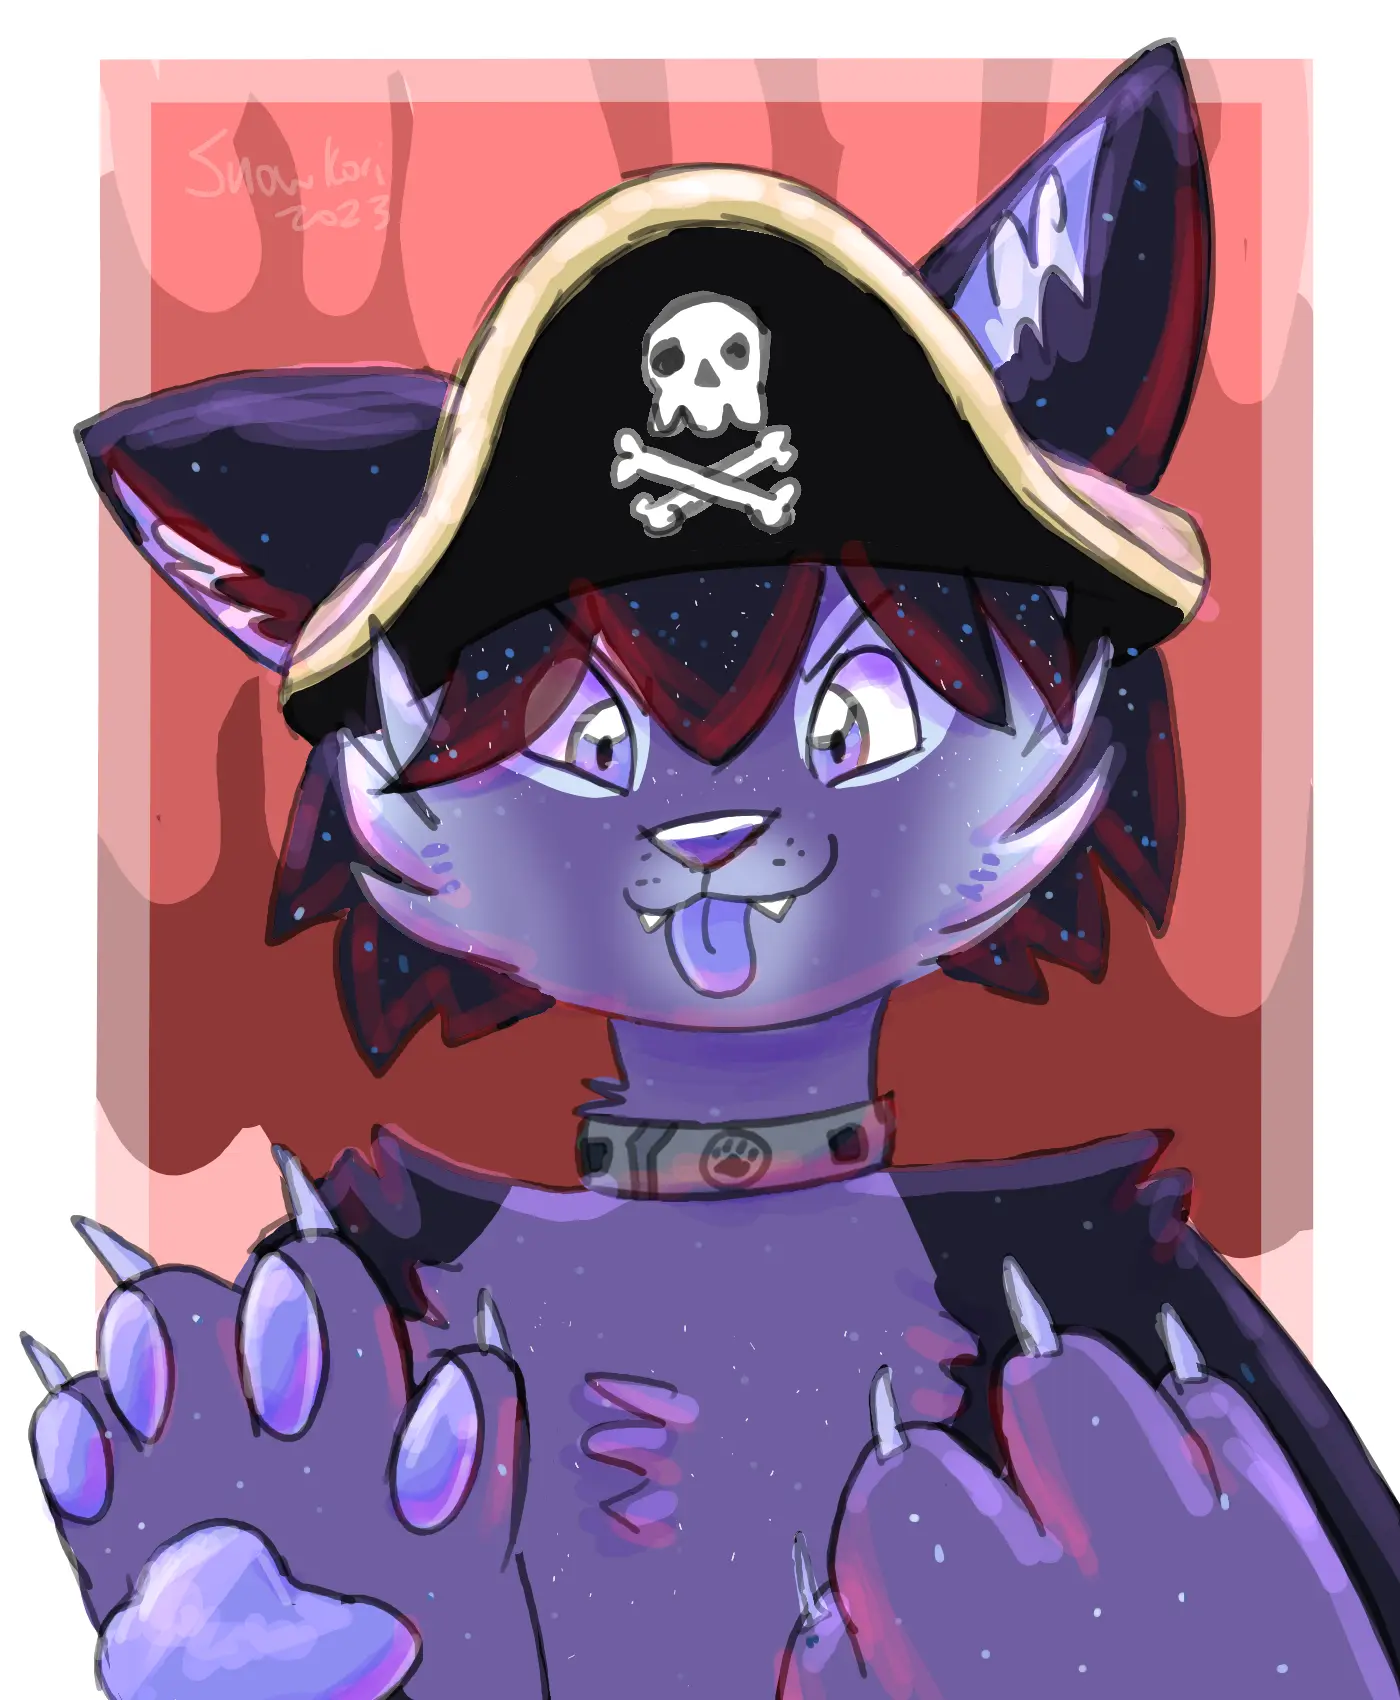 Purple space folf wearing a pirate hat!